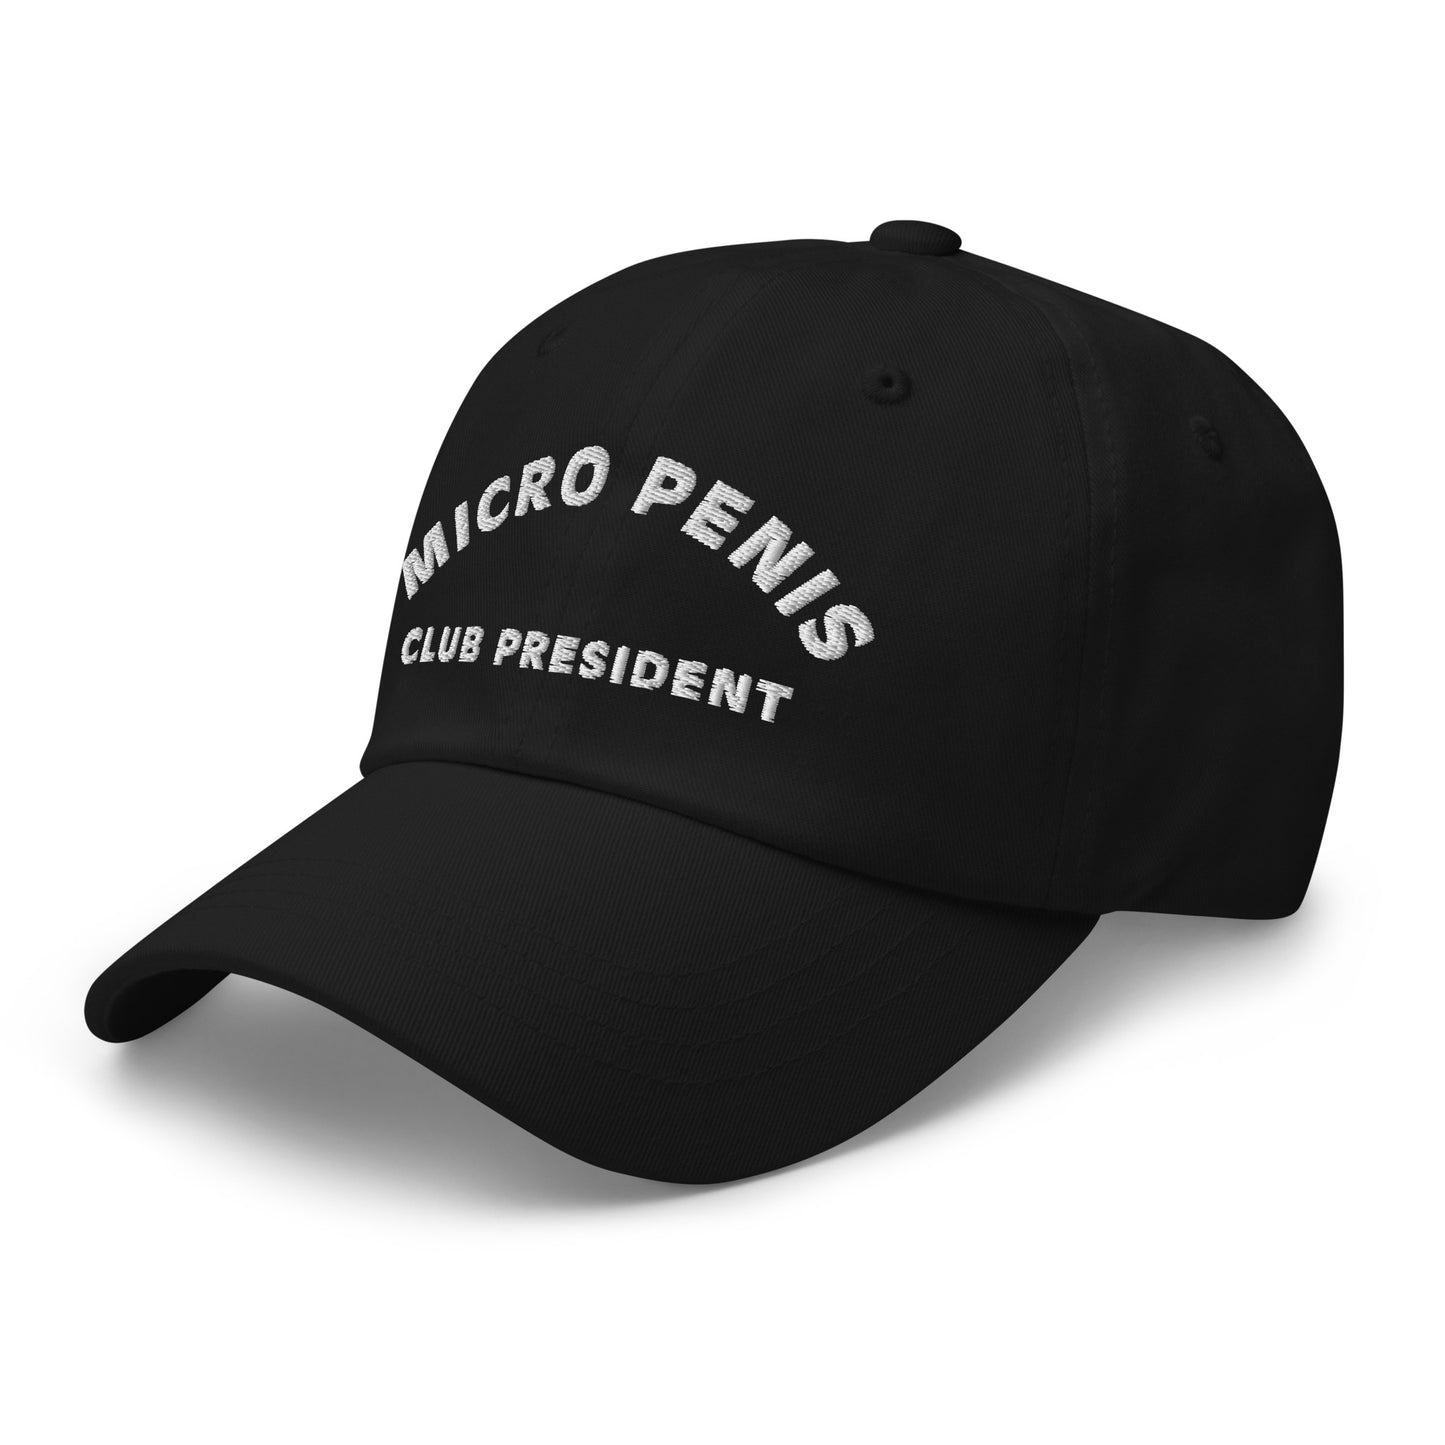 MICRO PENIS CLUB PRESIDENT Cap